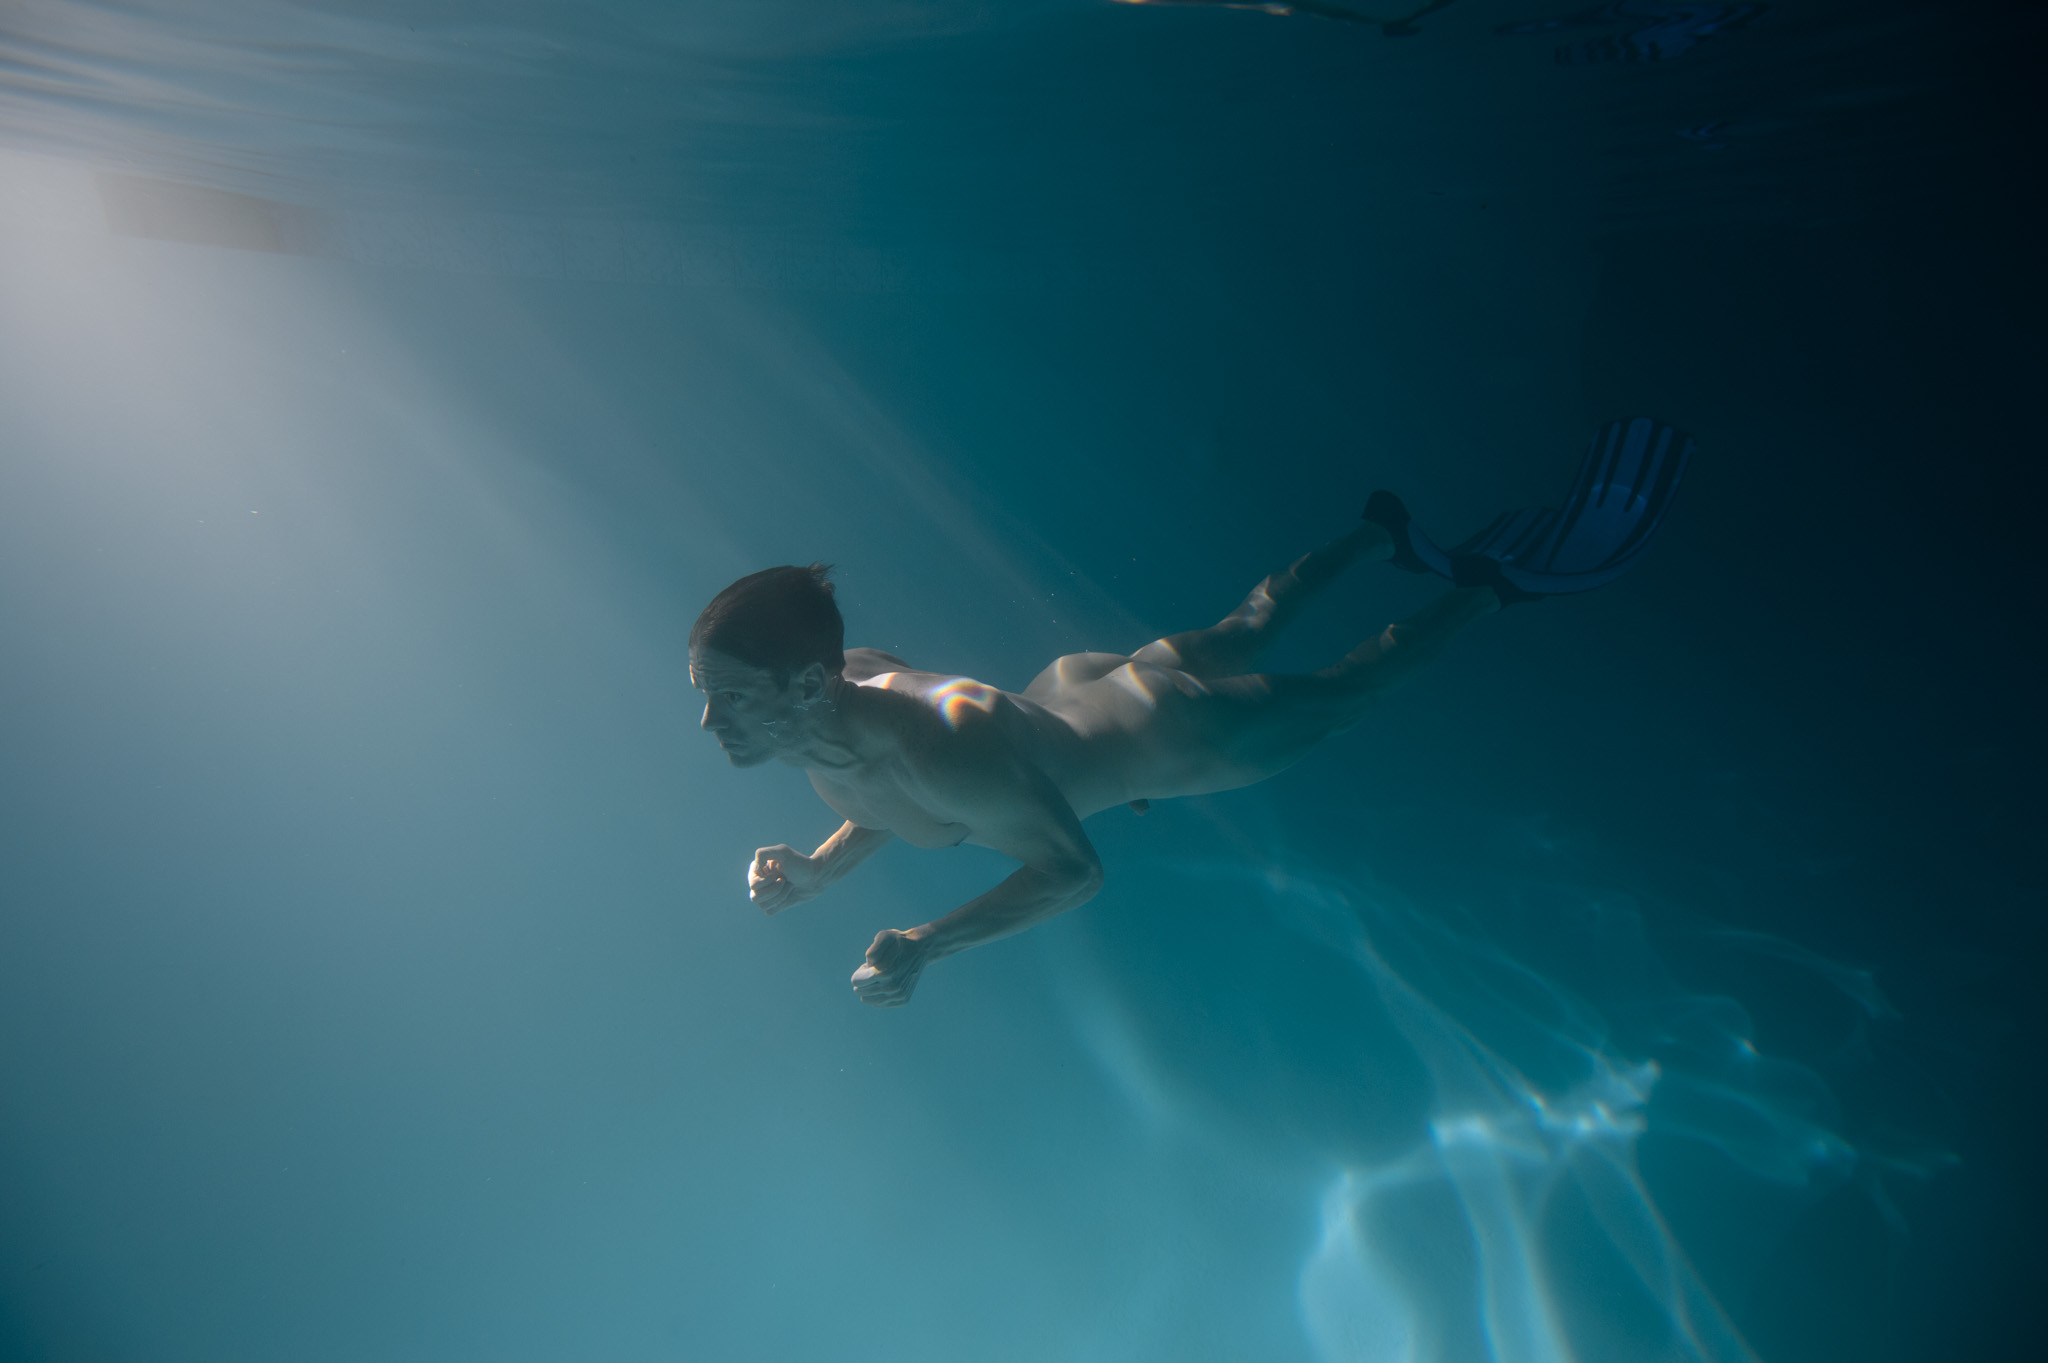 Kedori underwater (NSFW) - D-eye Photography - Blog